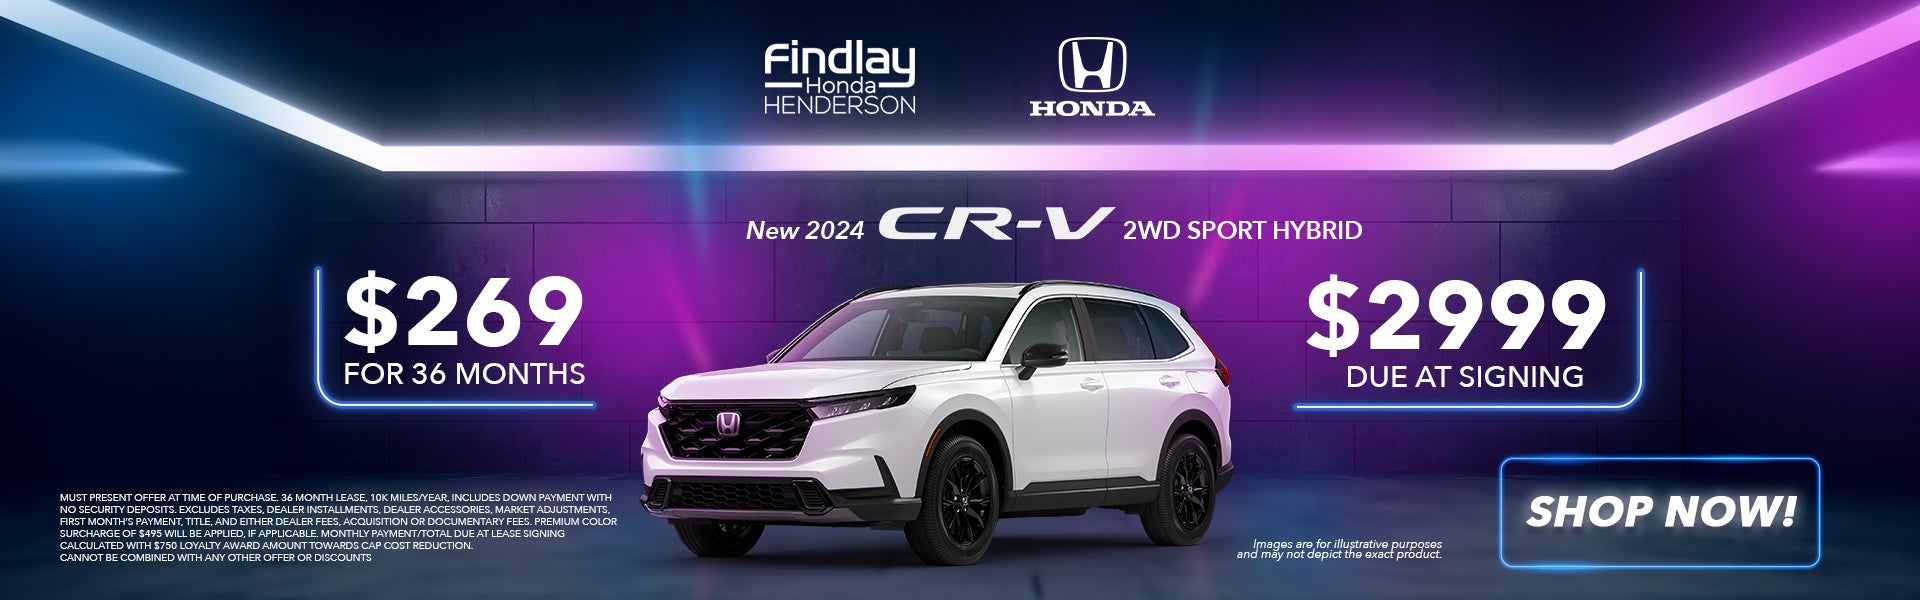 New 2024 CR-V 2WD Sport Hybrid